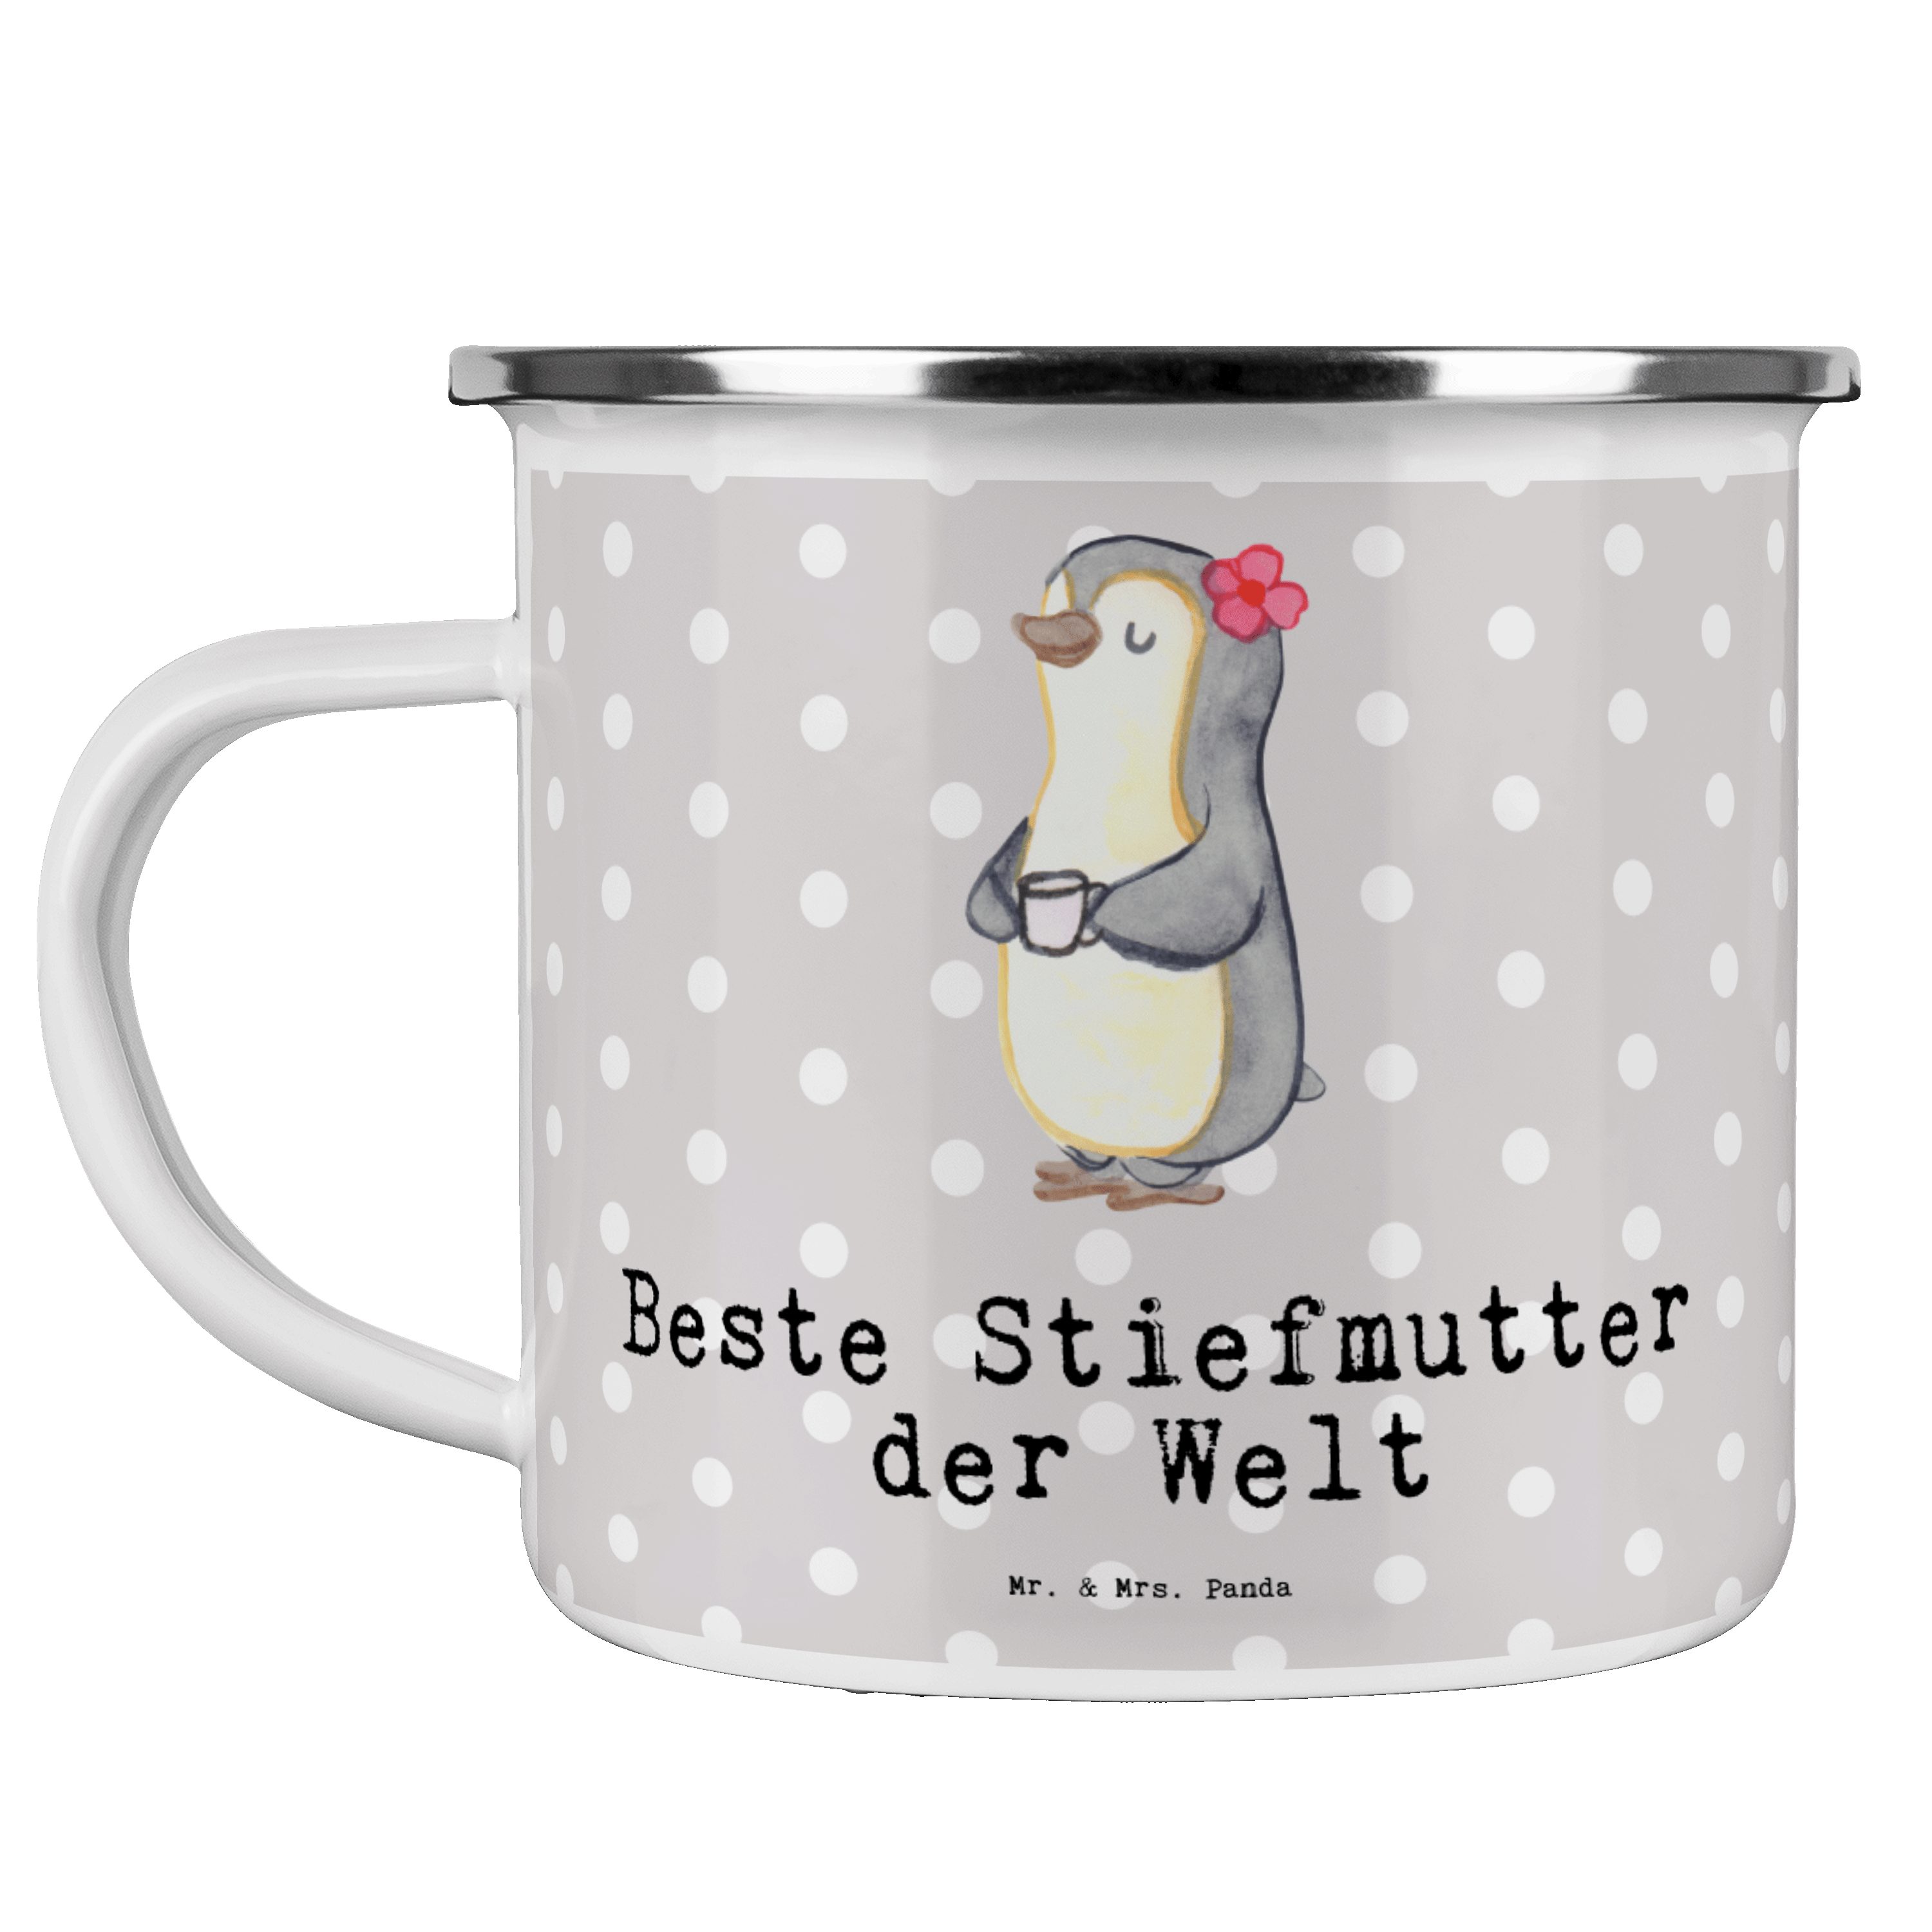 Mr. & Mrs. Panda Becher Pinguin Beste Stiefmutter der Welt - Grau Pastell - Geschenk, Metallt, Emaille